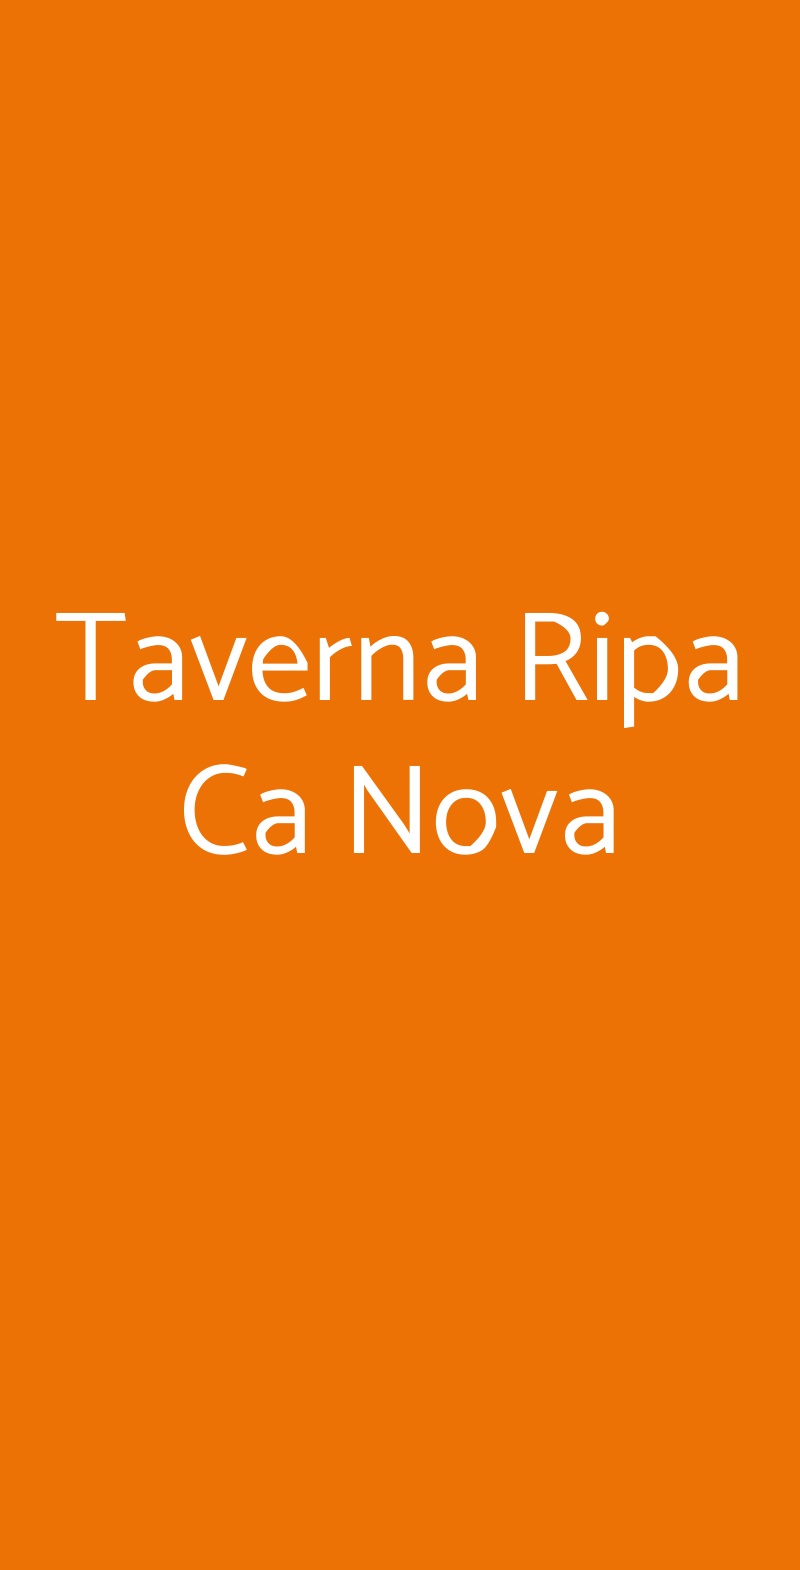 Taverna Ripa Ca Nova San Lazzaro di Savena menù 1 pagina